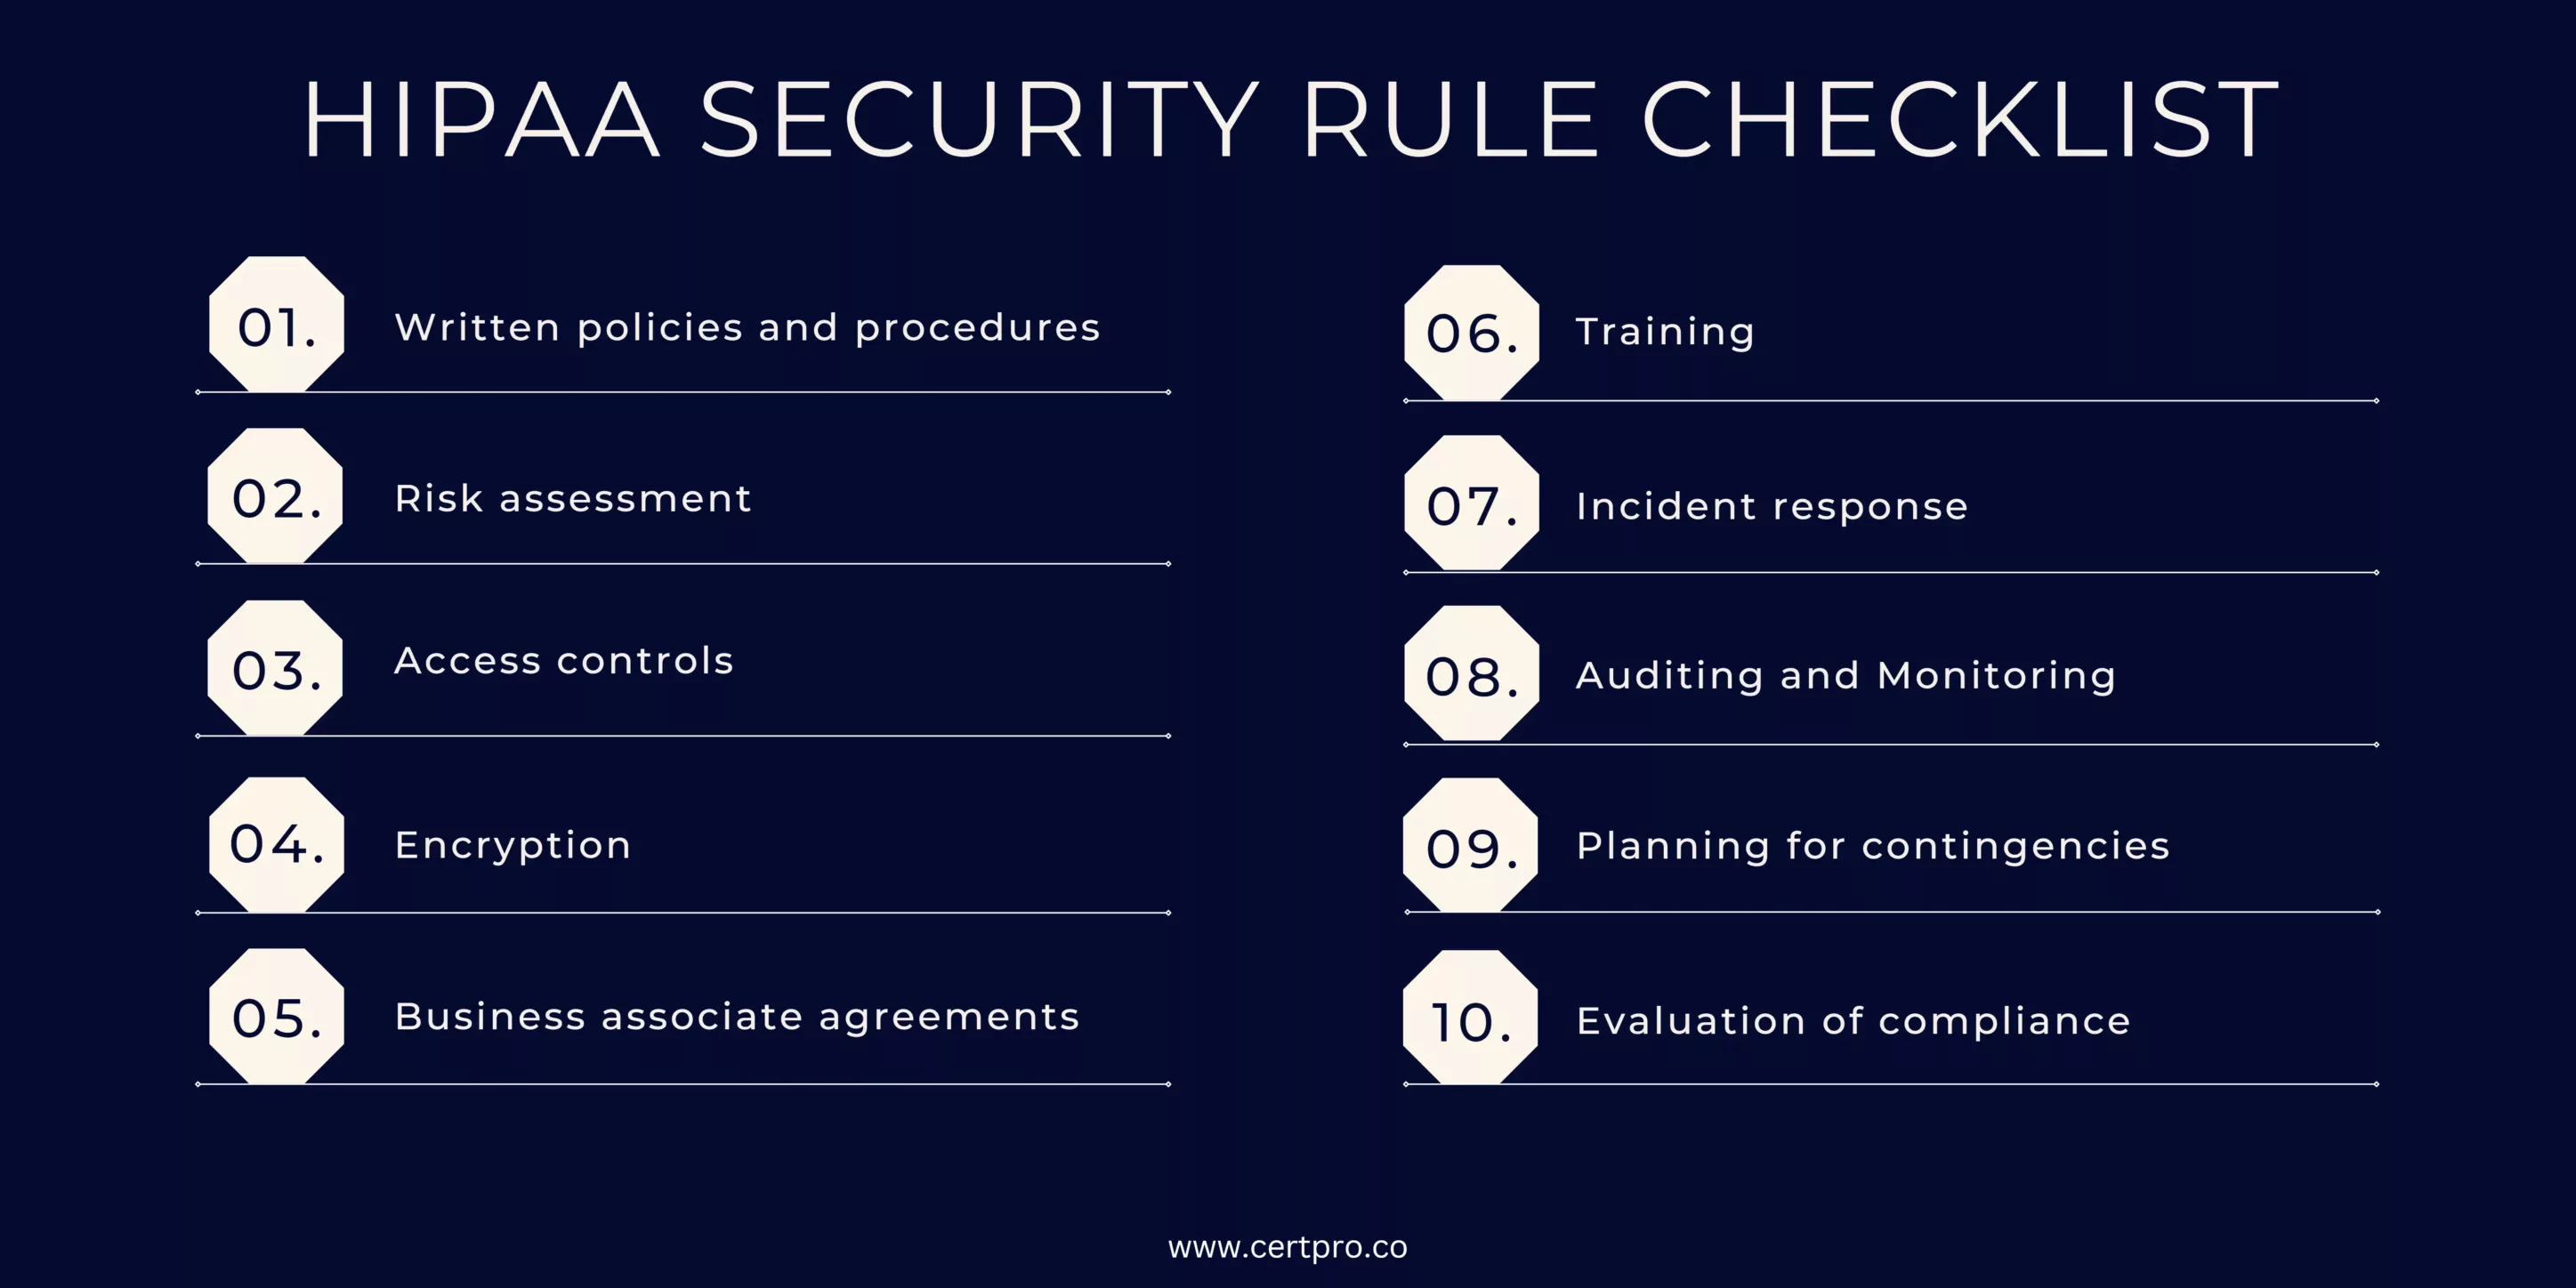 HIPAA Security Rule Checklist Steps